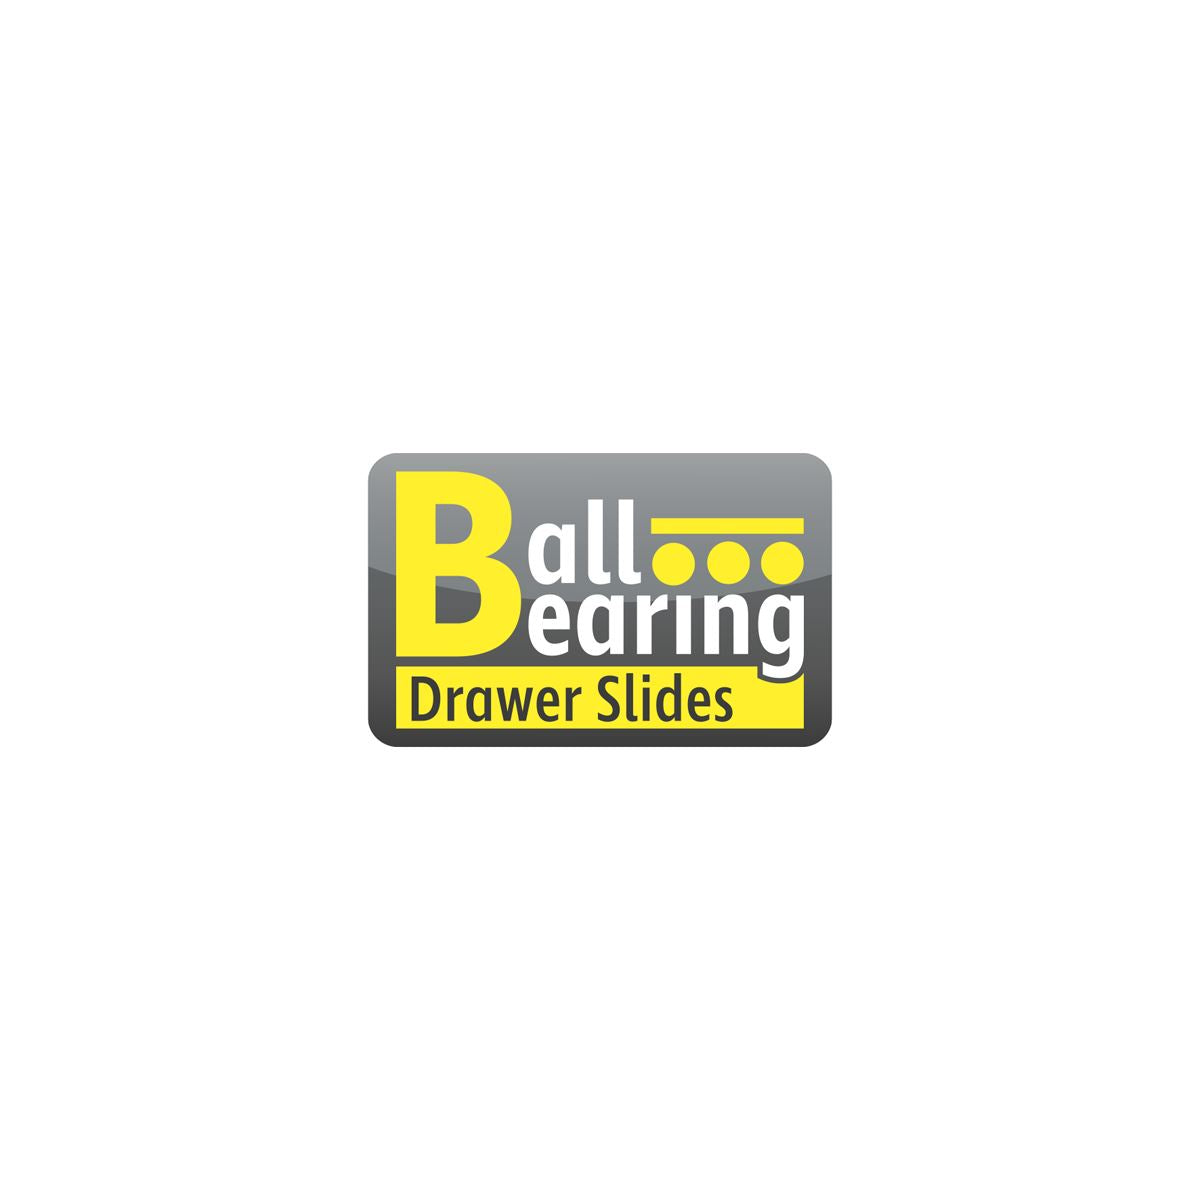 Sealey Topchest 10 Drawer Ball Bearing Slides Heavy-Duty - Black AP41110B